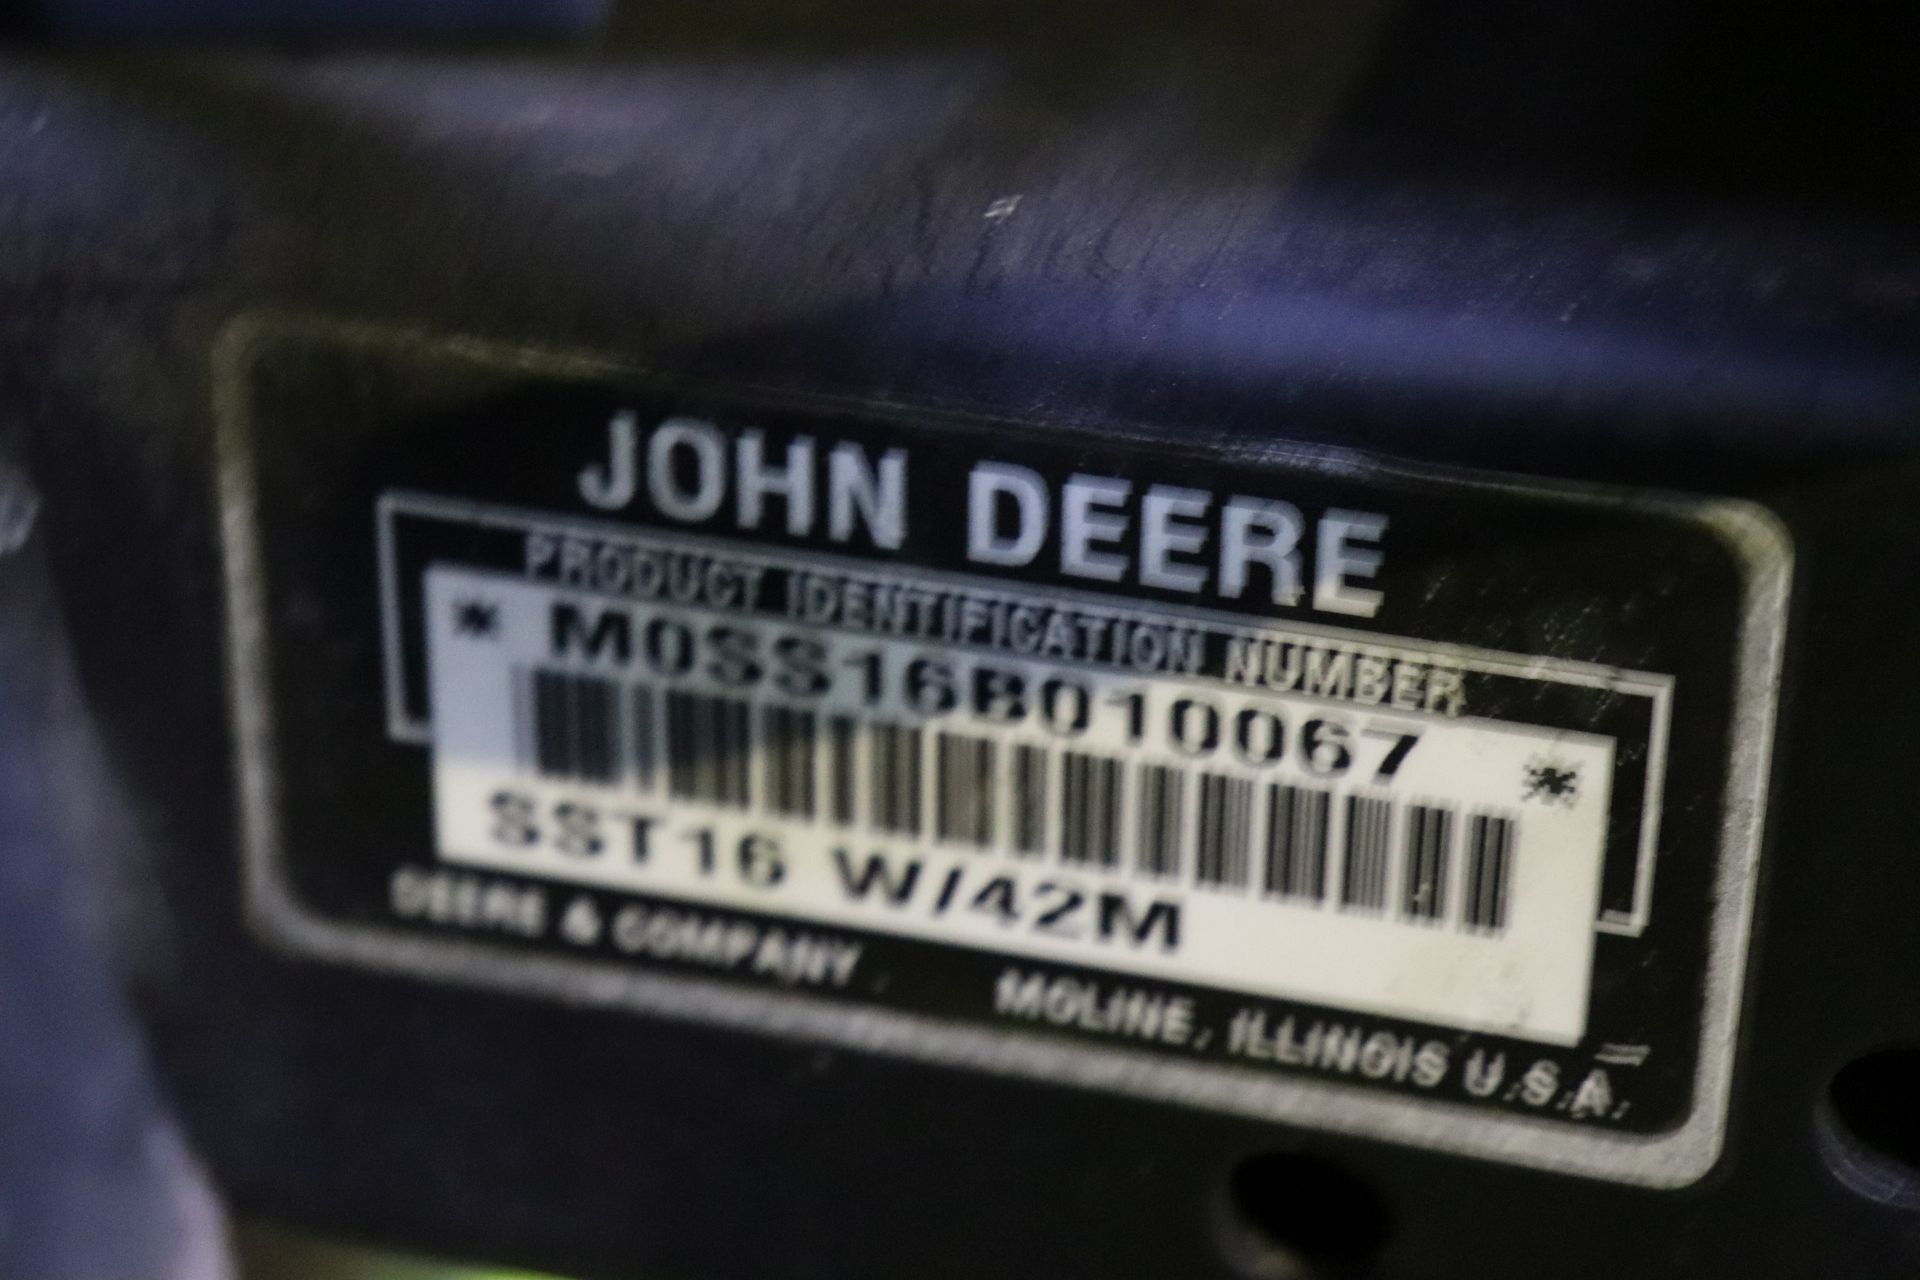 John Deere SST16 Zero-turn mower serial: M0SS16B010067 - Image 5 of 5